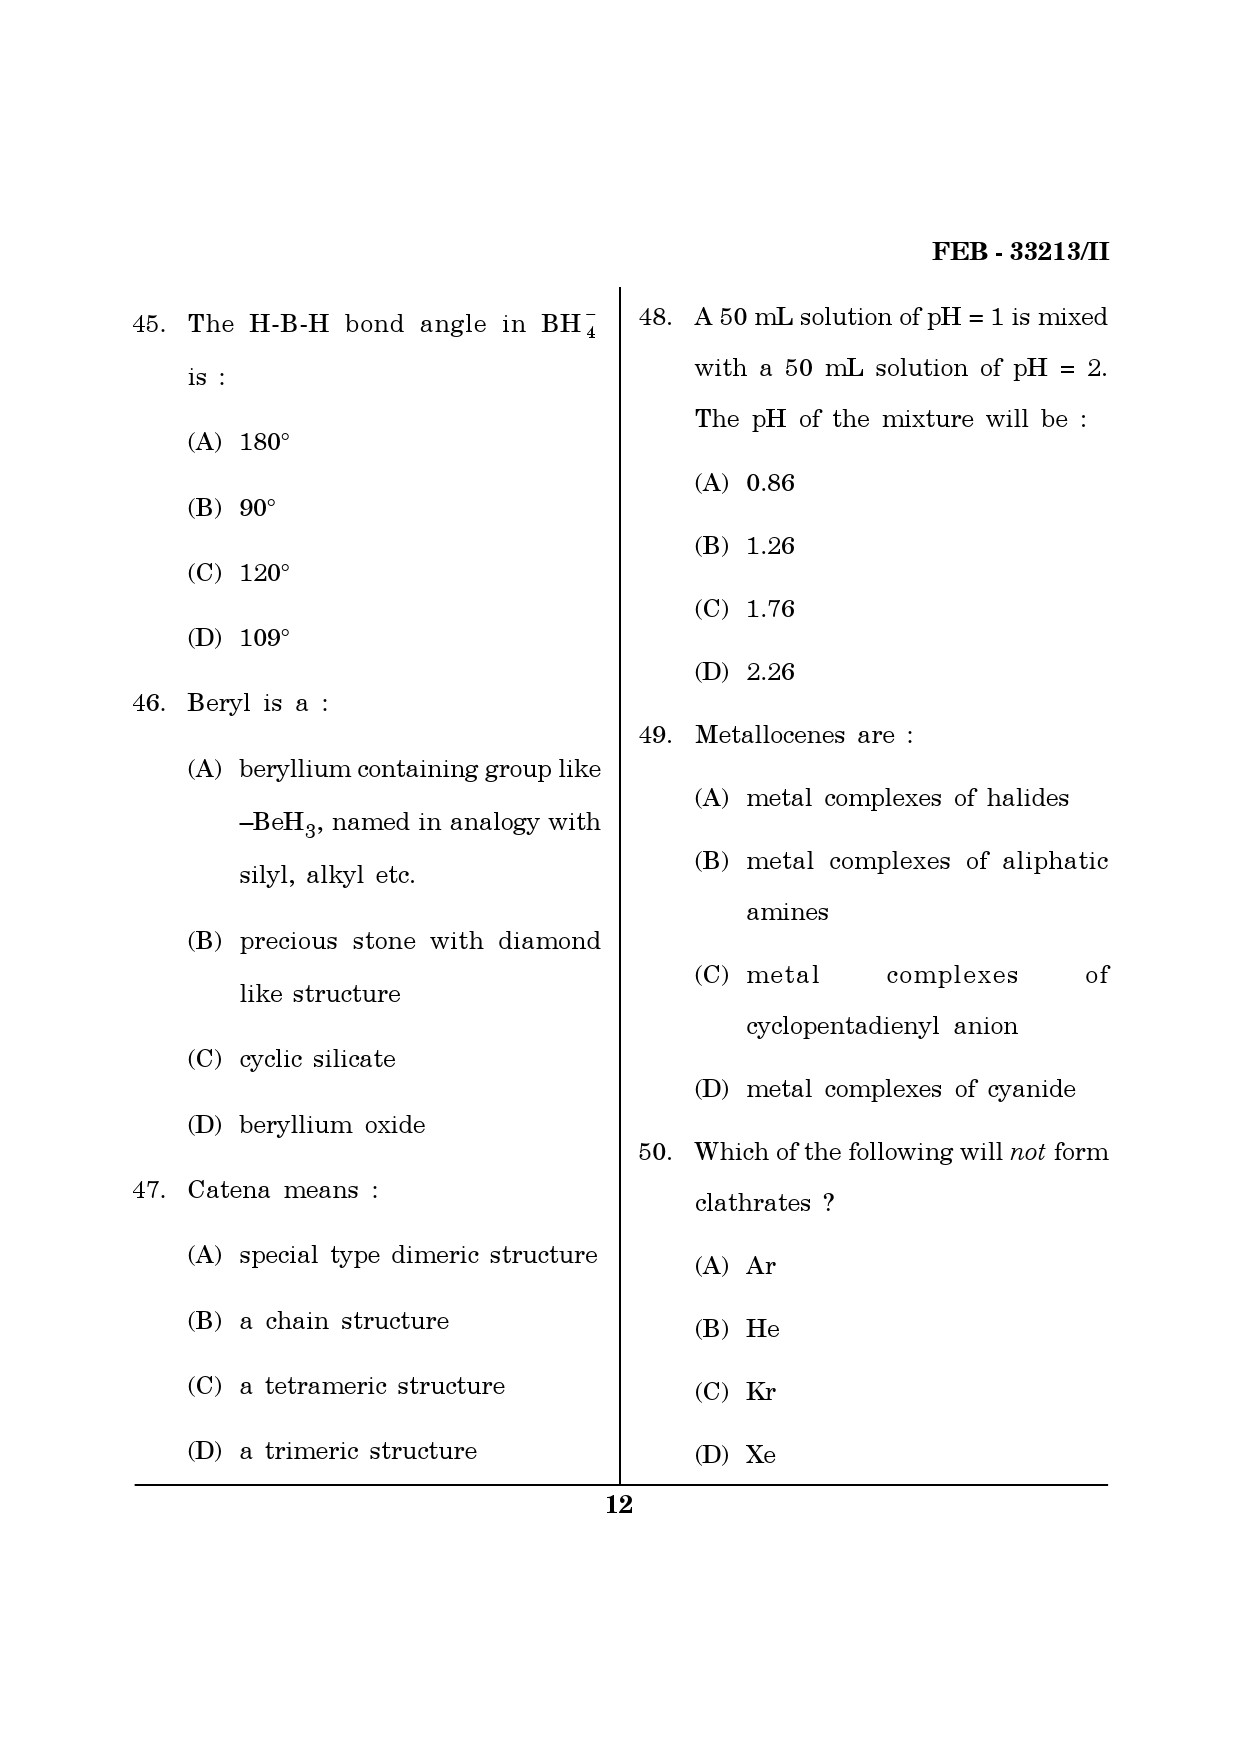 Maharashtra SET Chemical Sciences Question Paper II February 2013 12